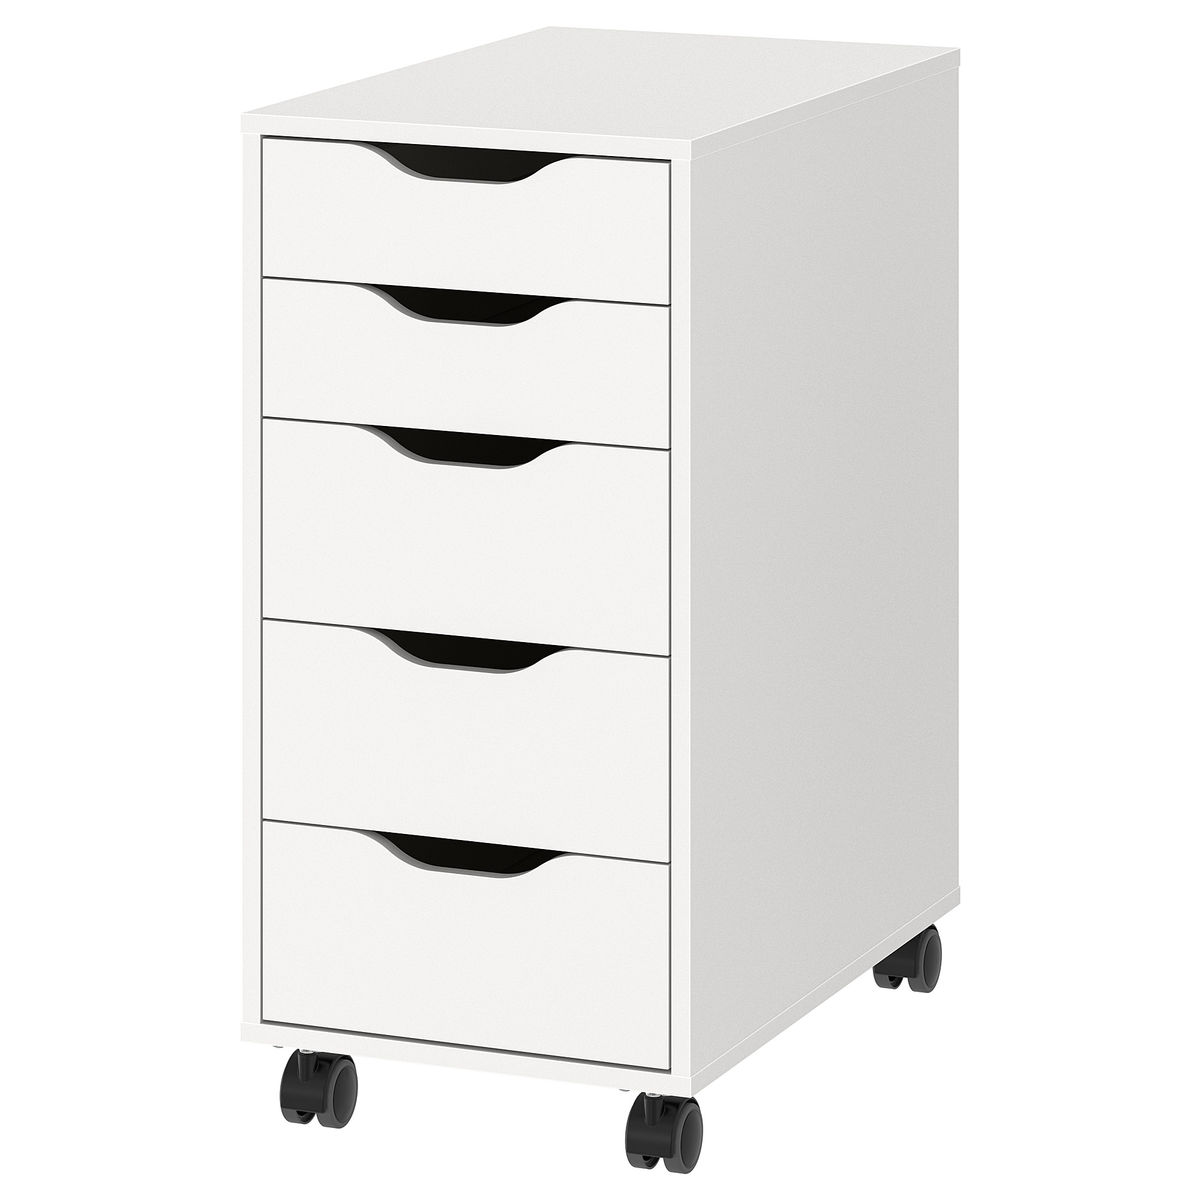 IKEA ALEX Drawer with Wheels, 36x76 cm, White/Black